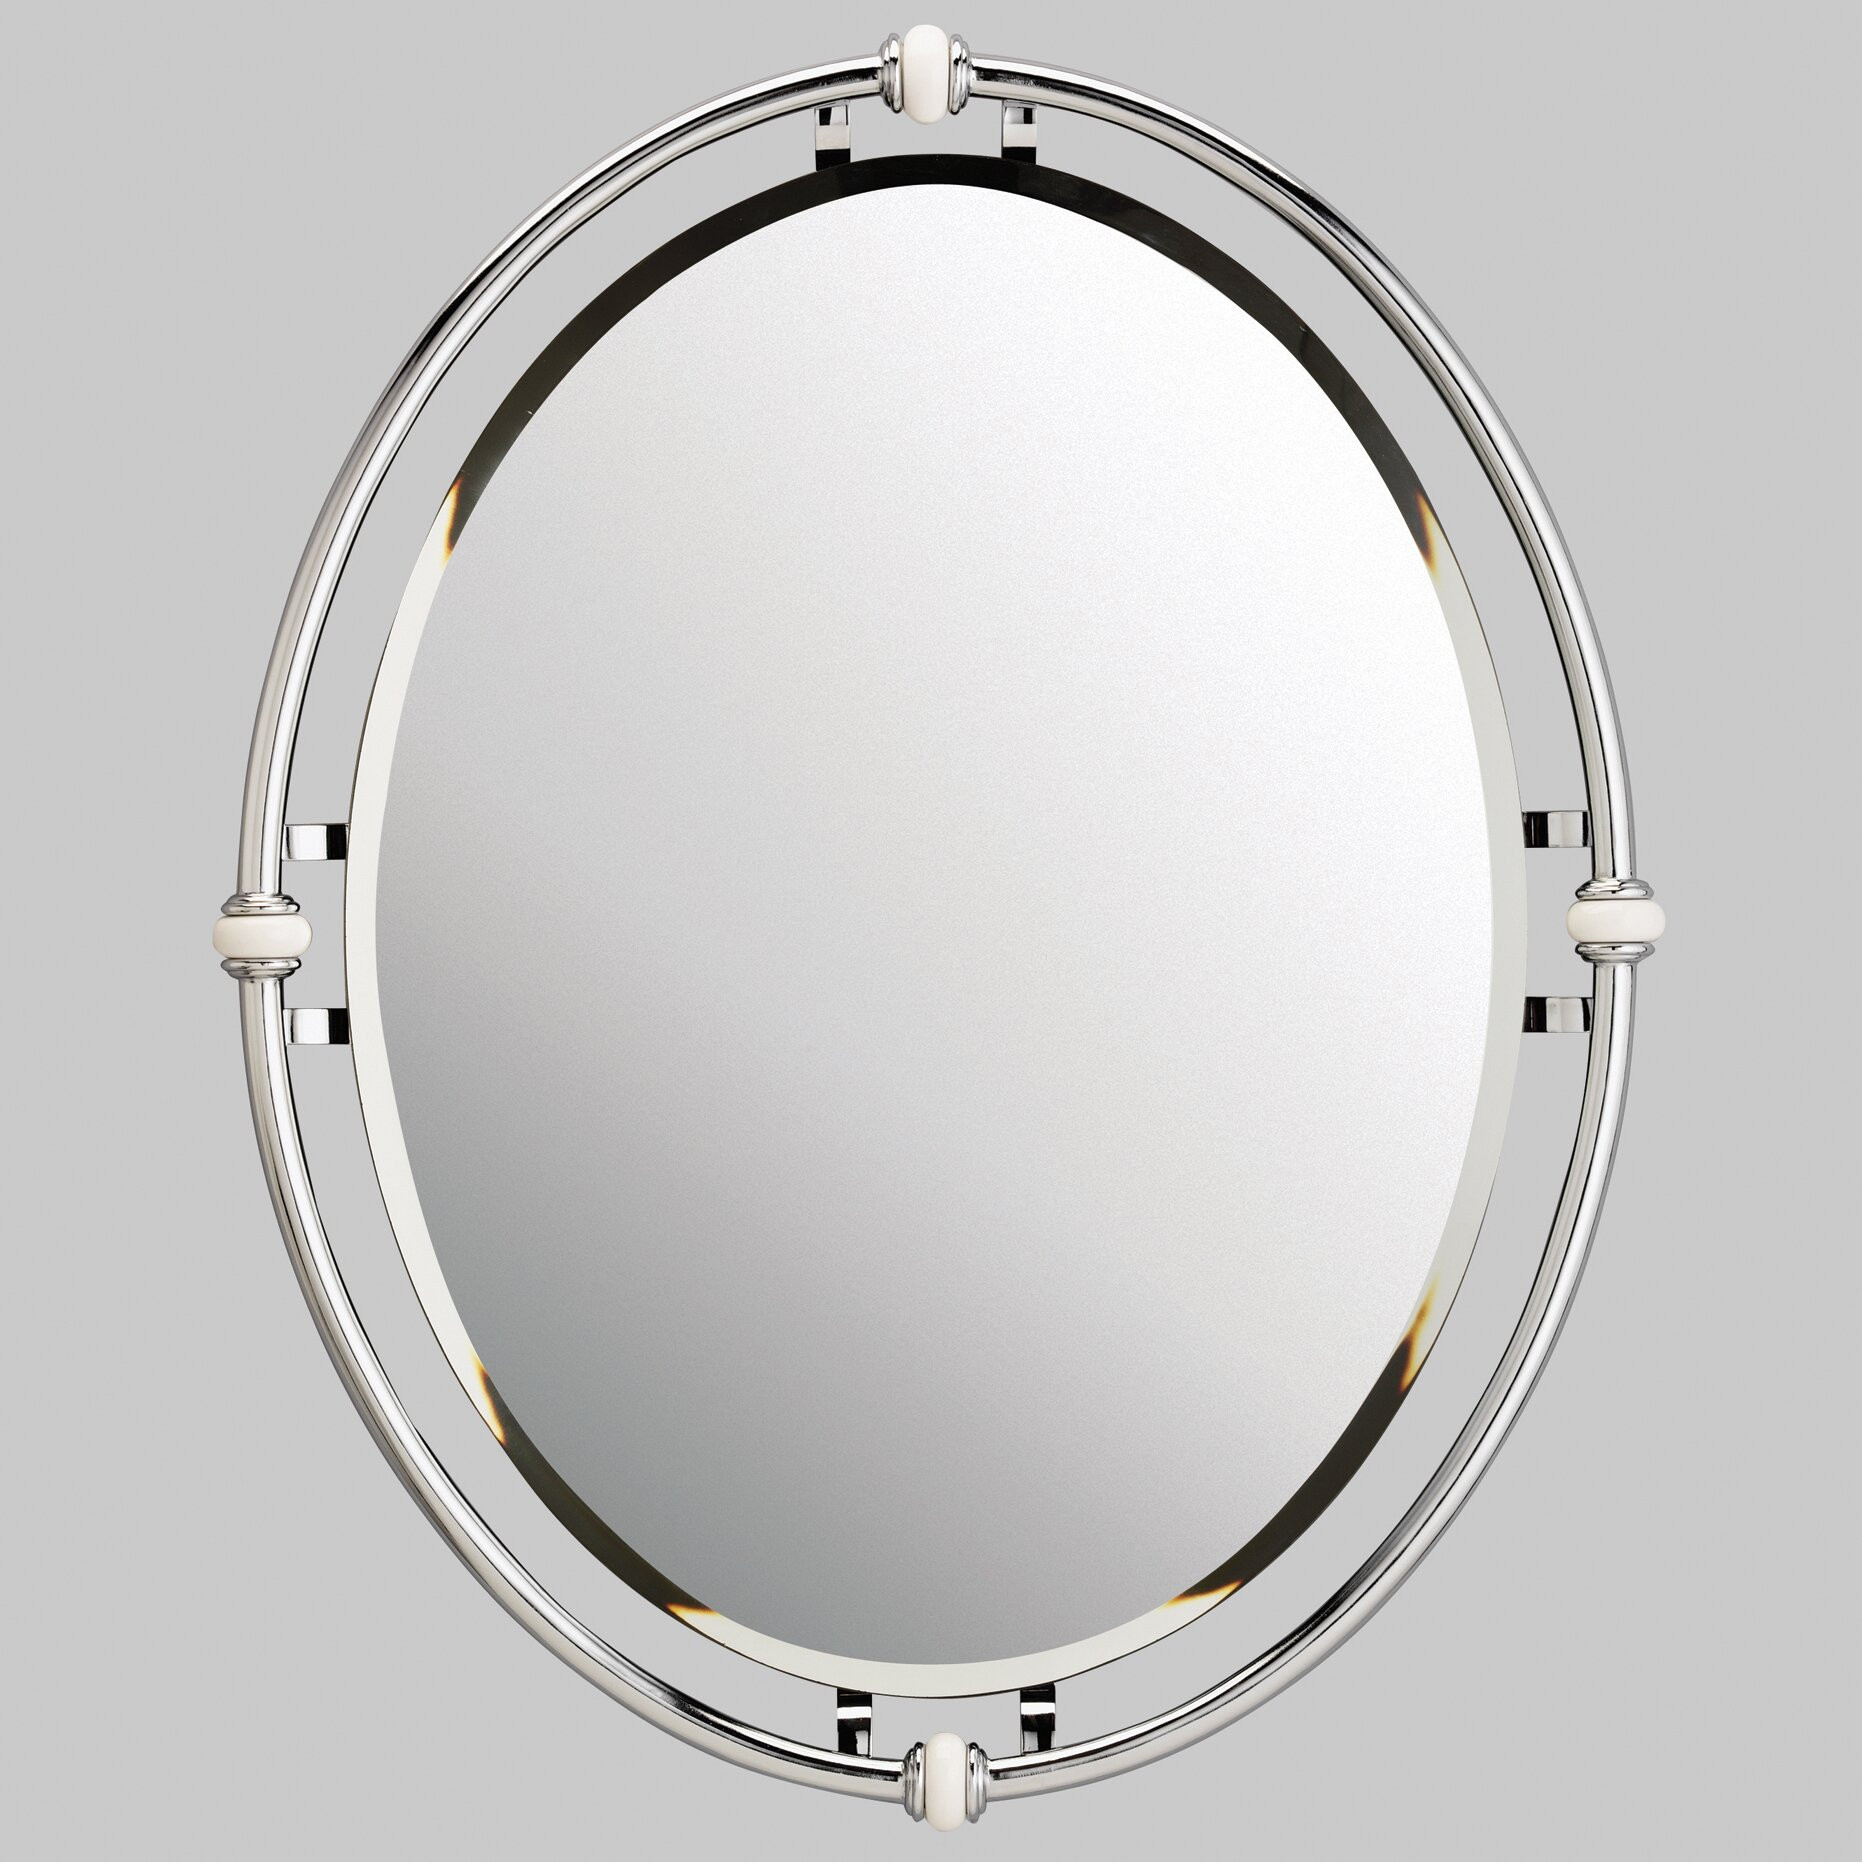 Oval Bathroom Mirror
 Kichler Oval Beveled Mirror & Reviews